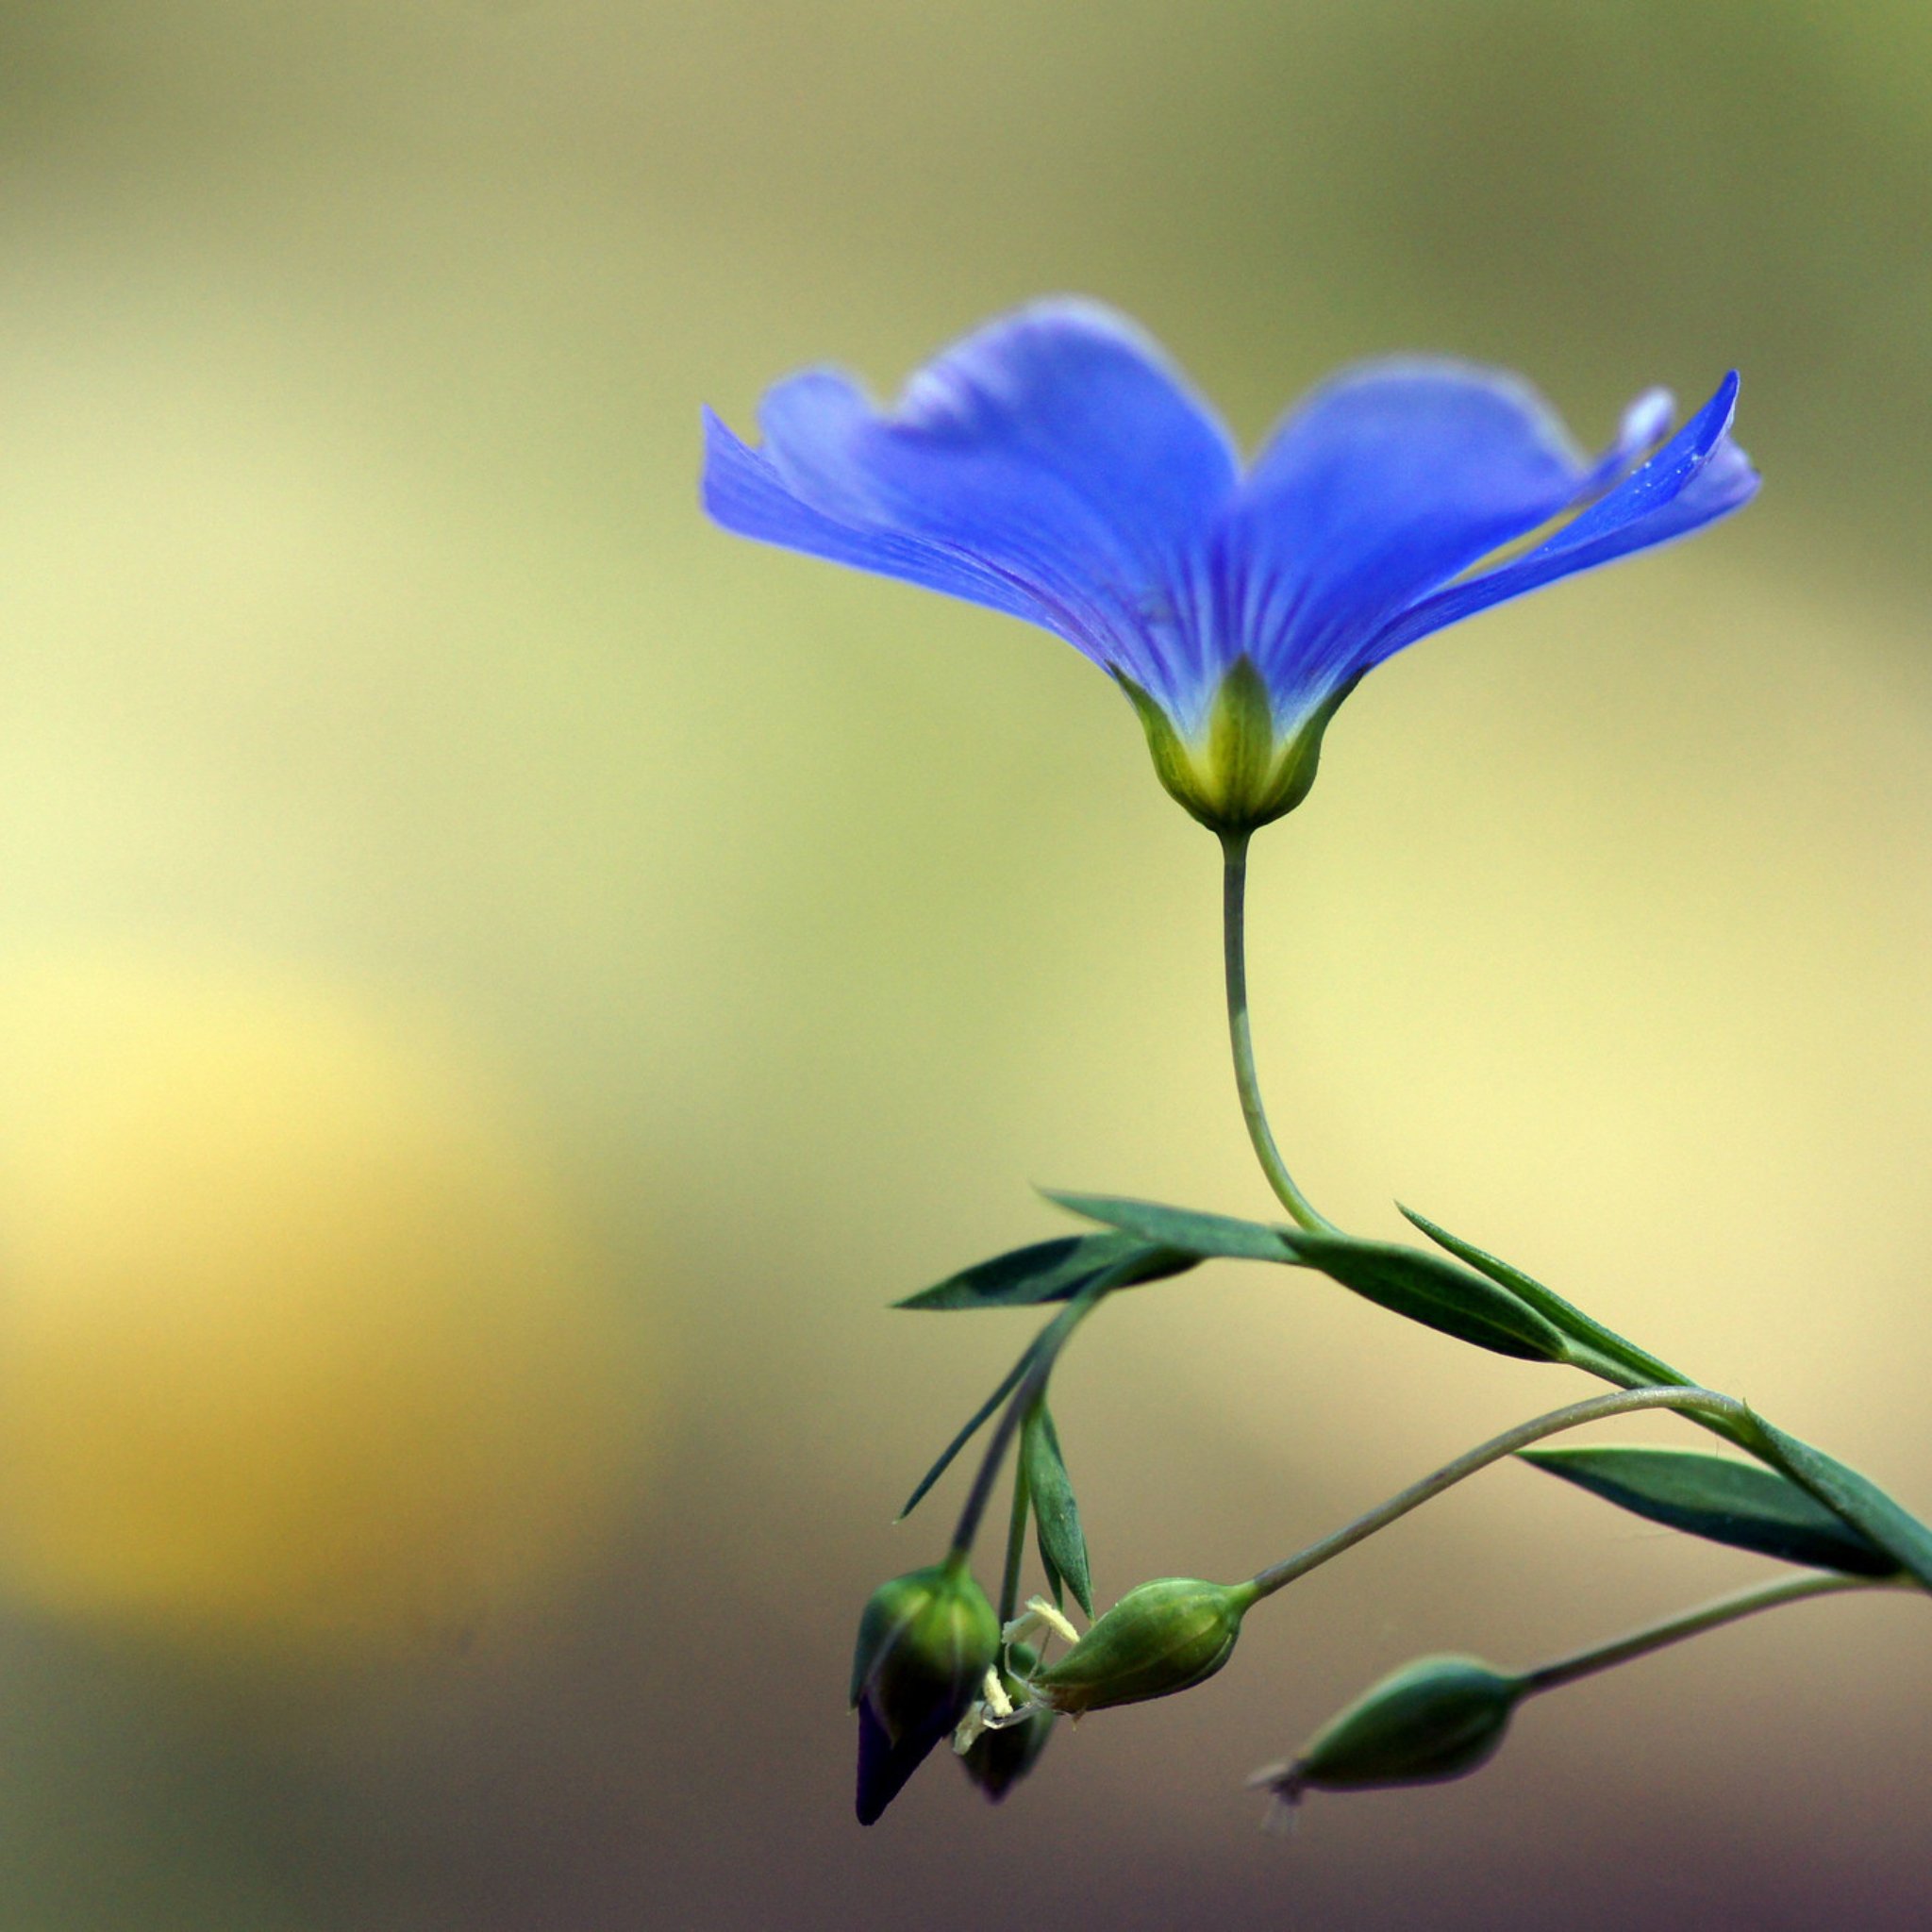 Молчание цветы. Синие цветы. Лен цветок. Фон с одним цветком. Букет льна.